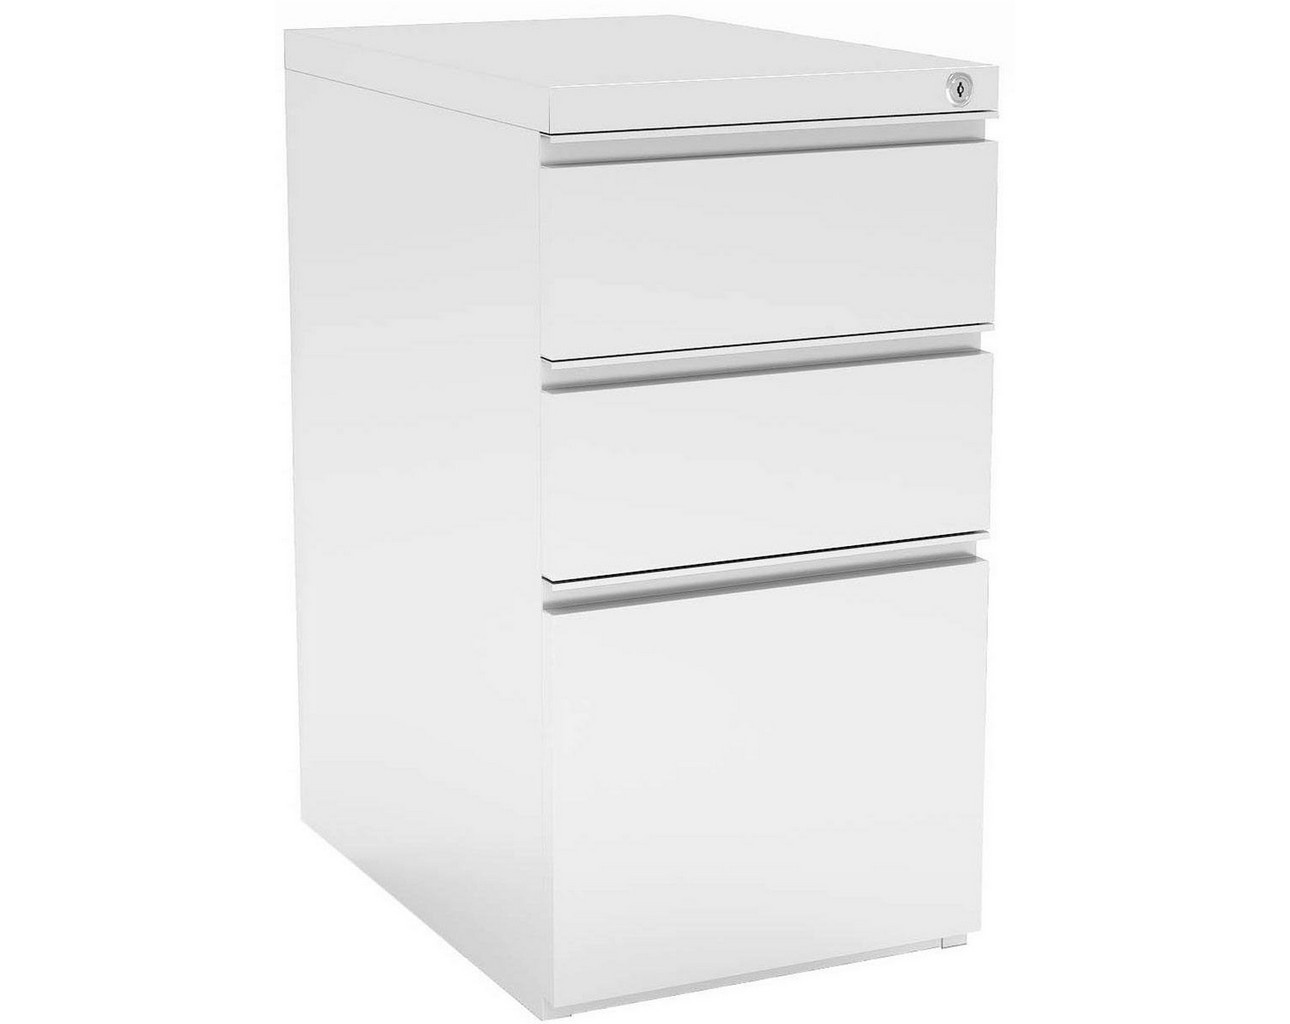 Premium Steel Metal Filing Cabinet – 3 Drawer in White